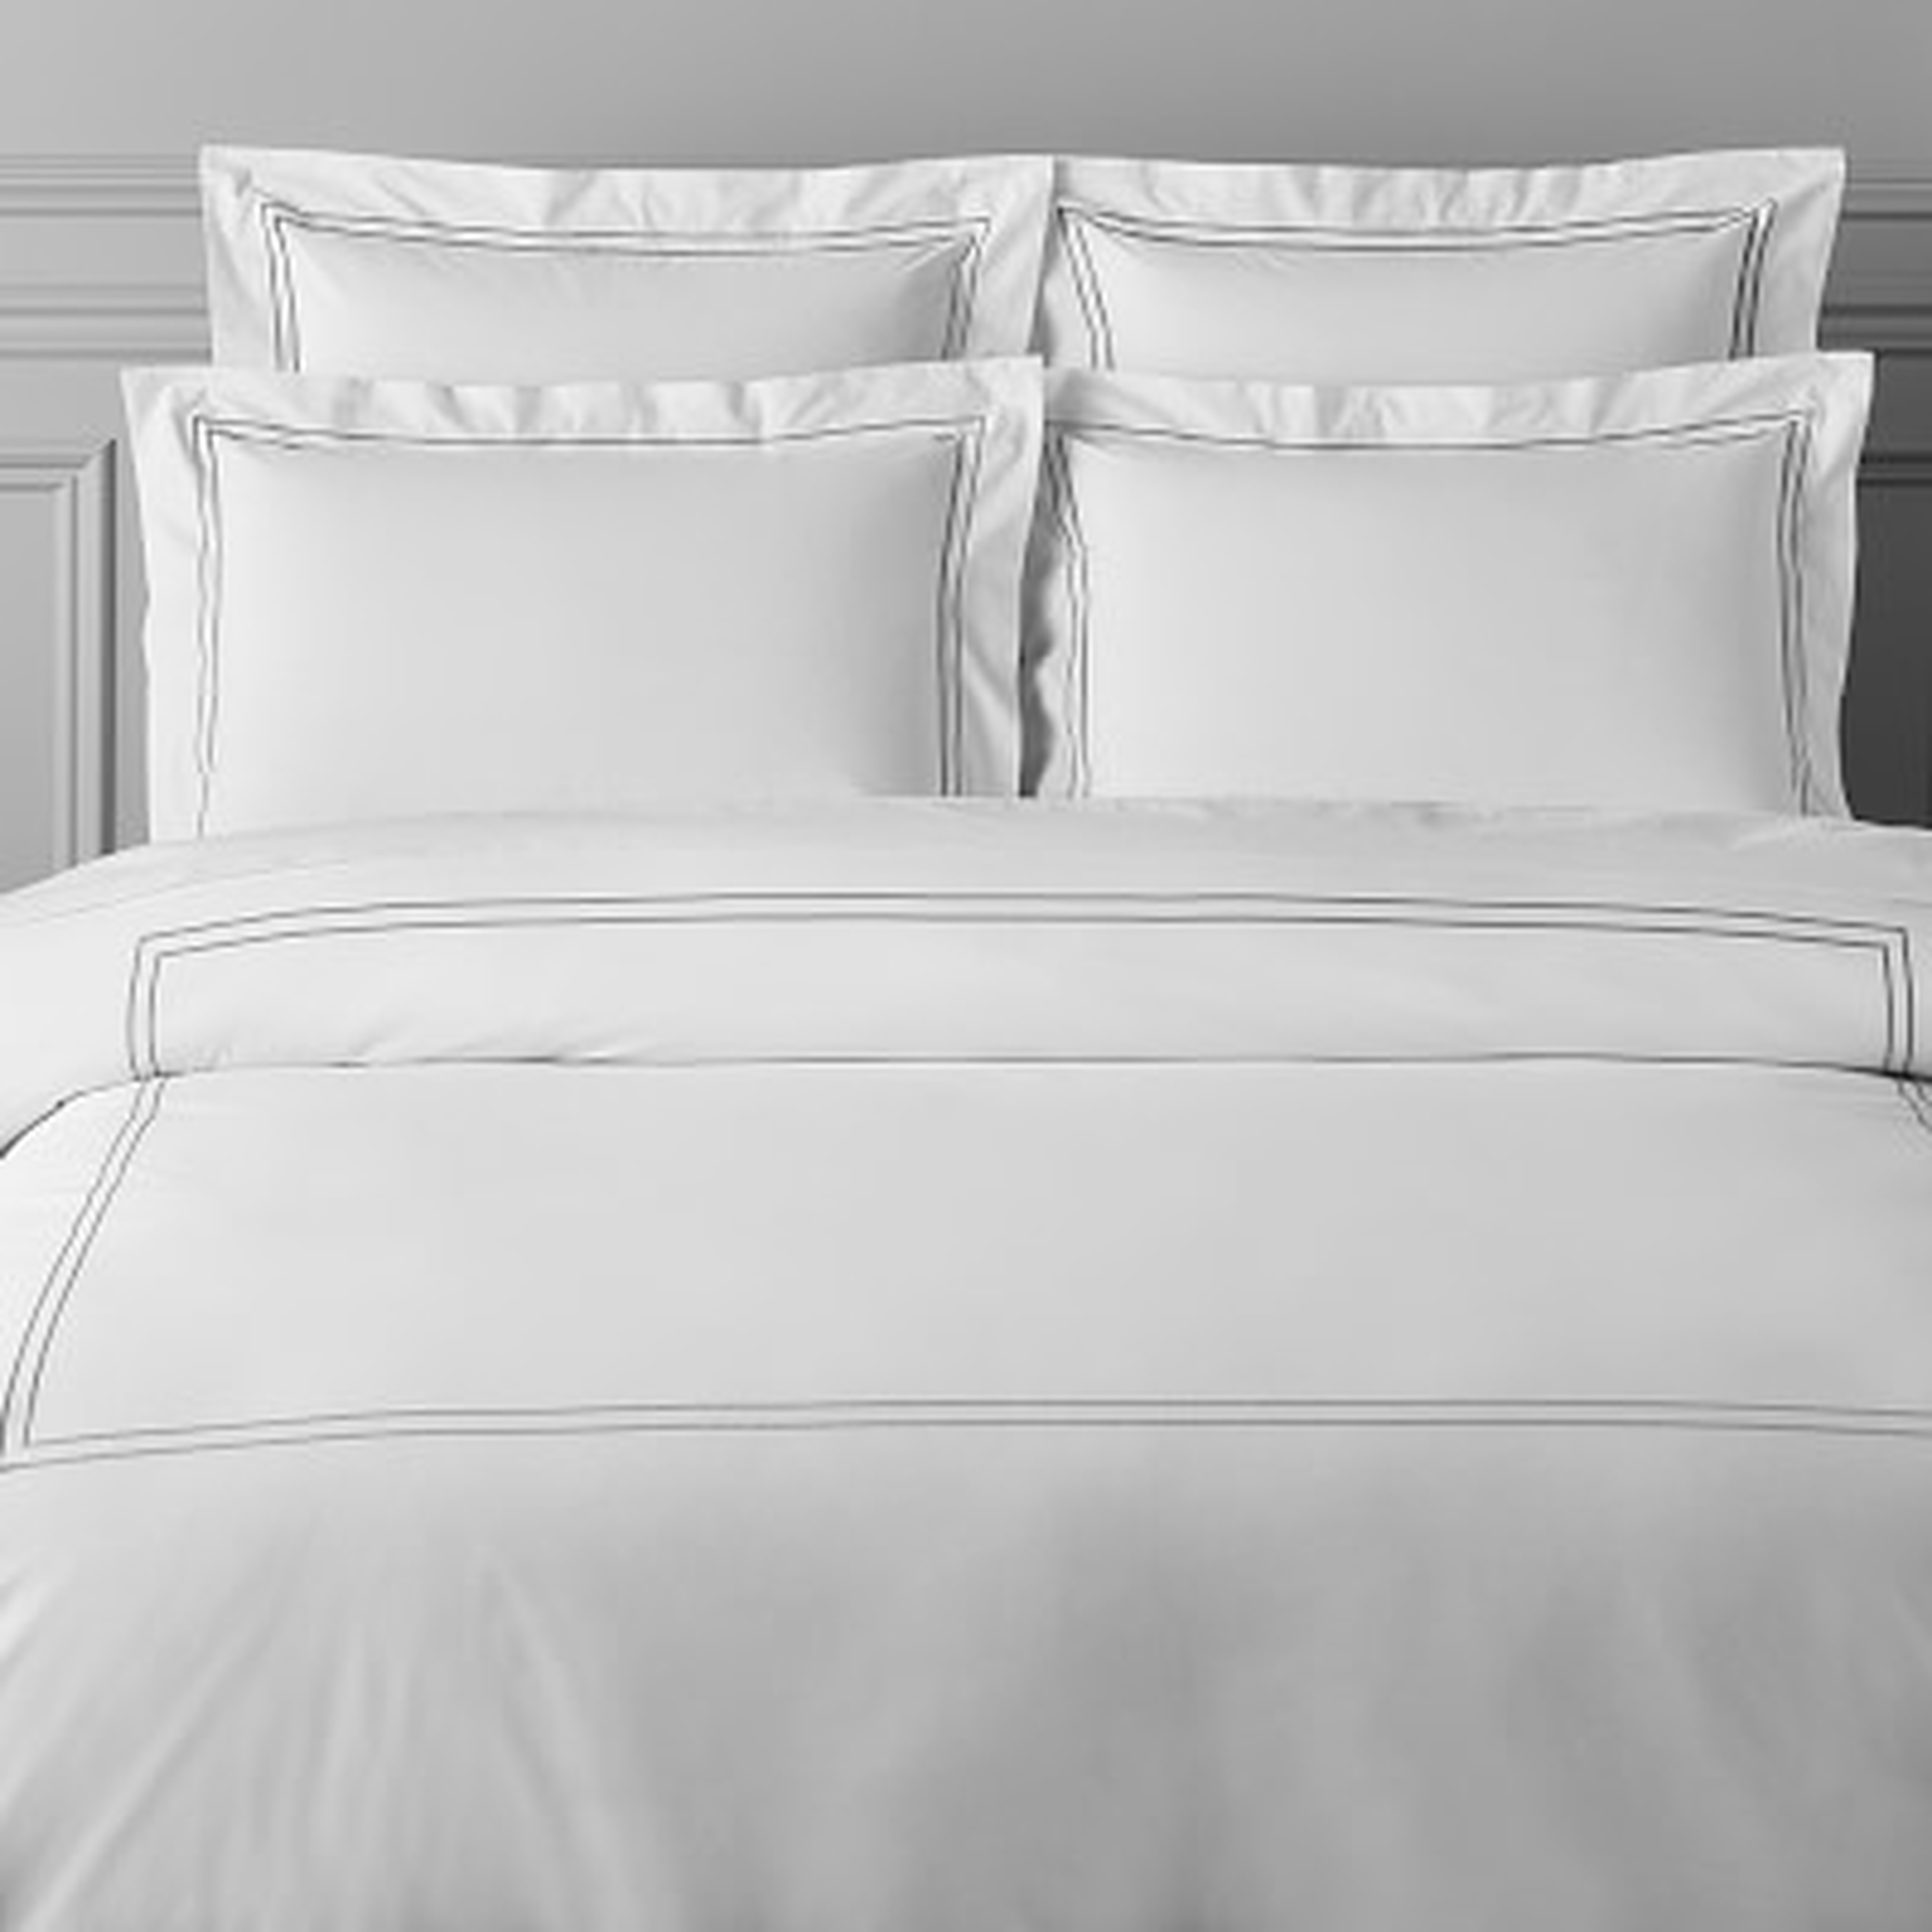 White Hotel Bedding, Sham, Each, Two-Line, King, Gray - Williams Sonoma